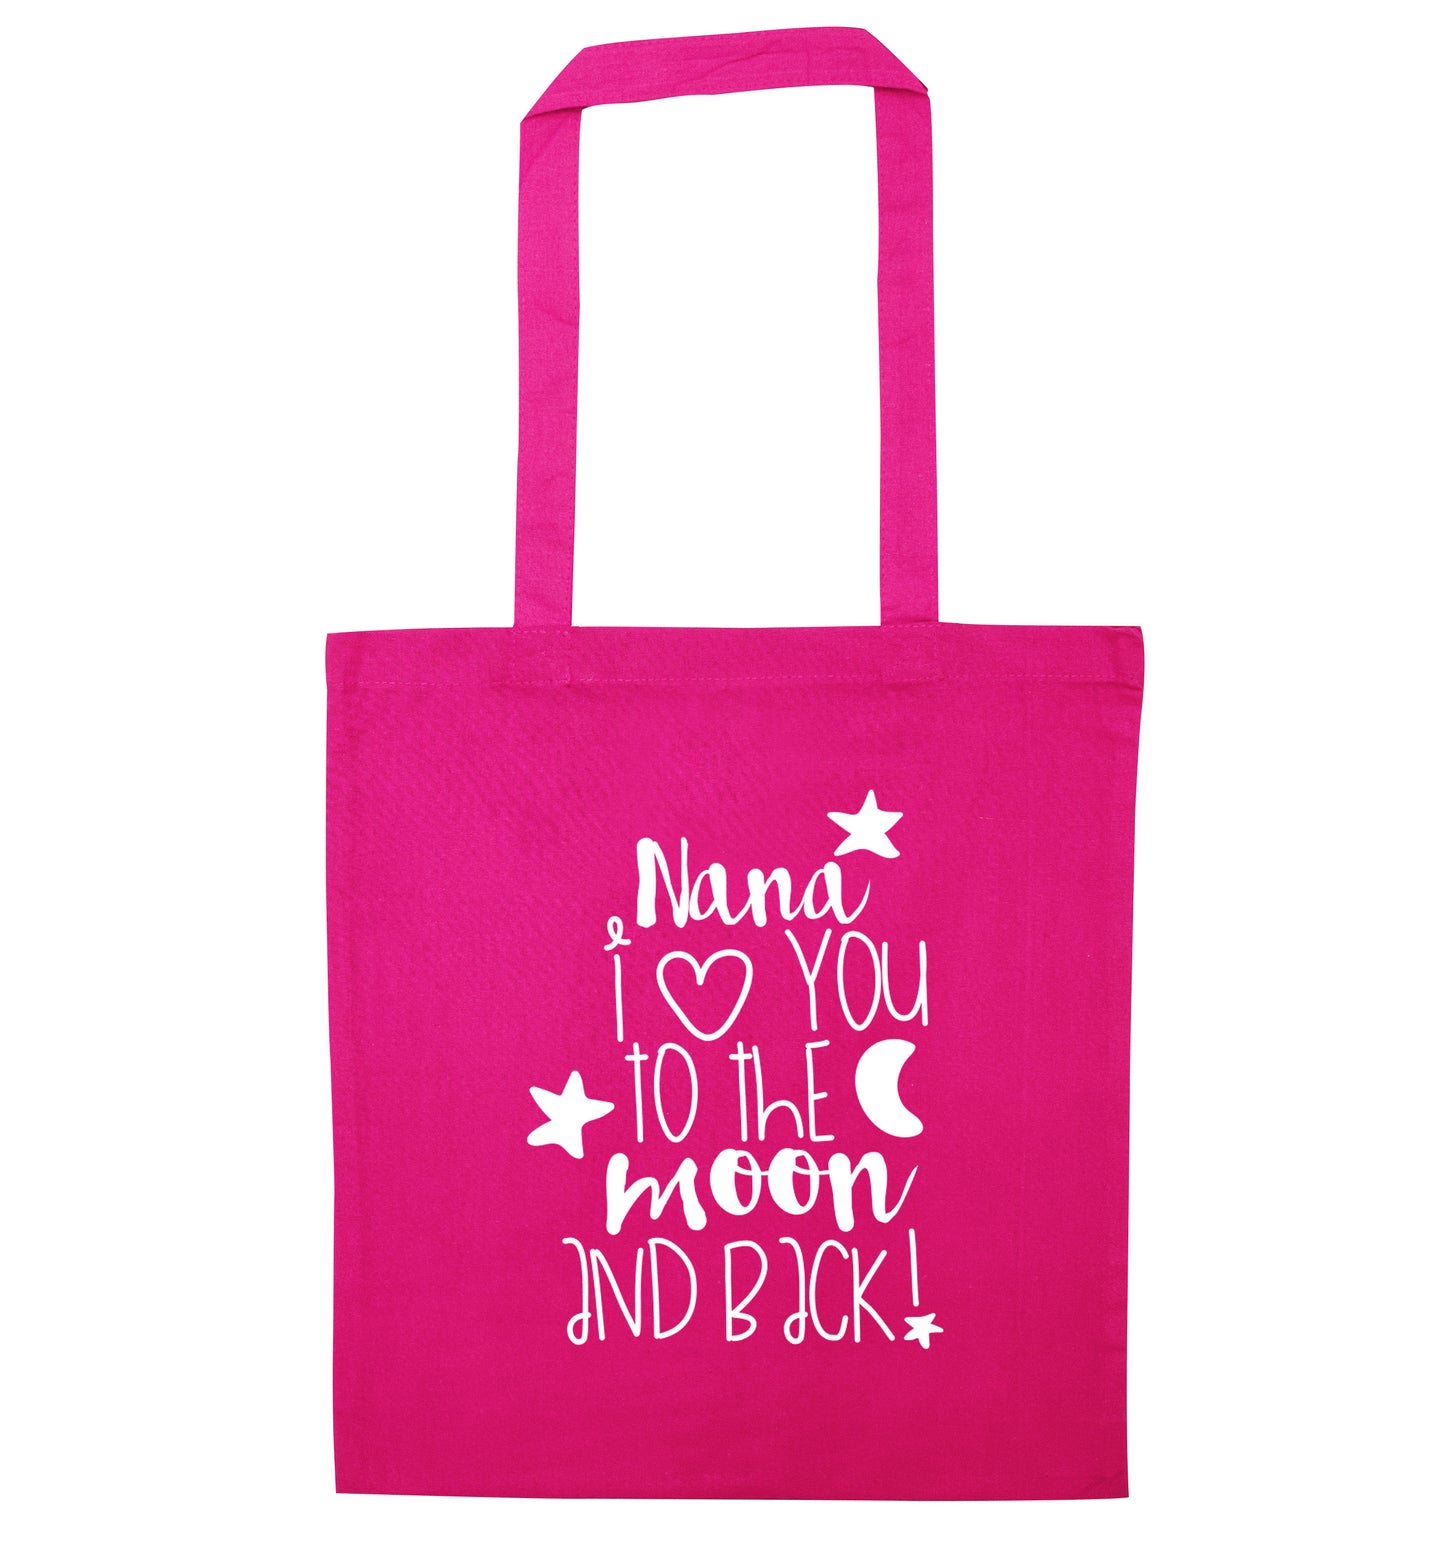 Nana's little bodybuilder pink tote bag